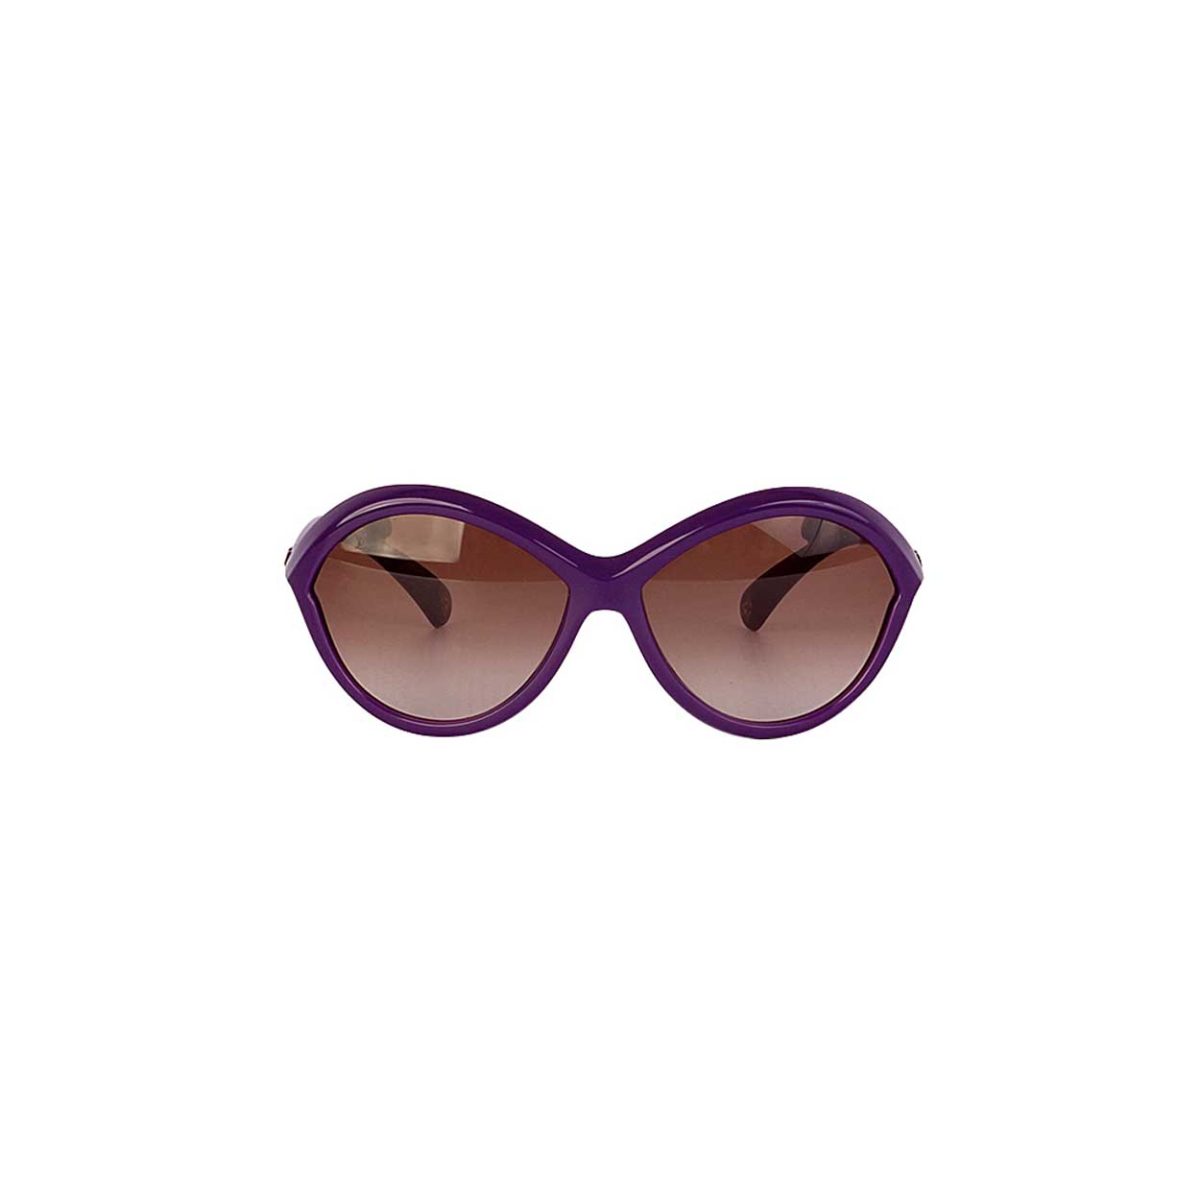 Louis Vuitton Flore Sunglasses in Black and Violet